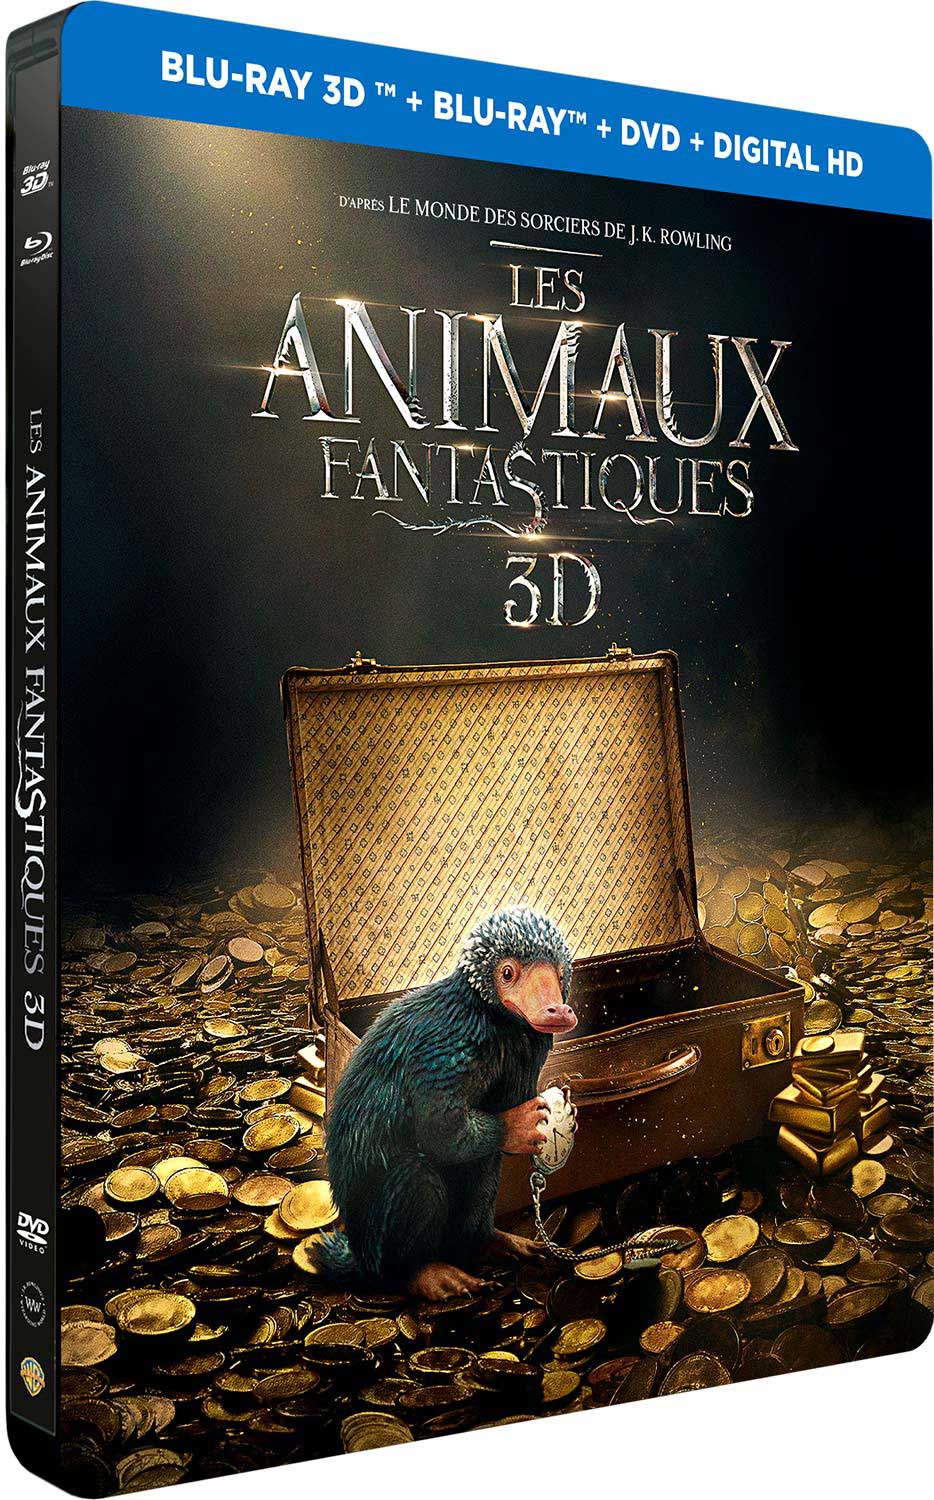 Les Animaux Fantastiques - SteelBook - Blu-ray 3D + Blu-ray + DVD + Digital HD